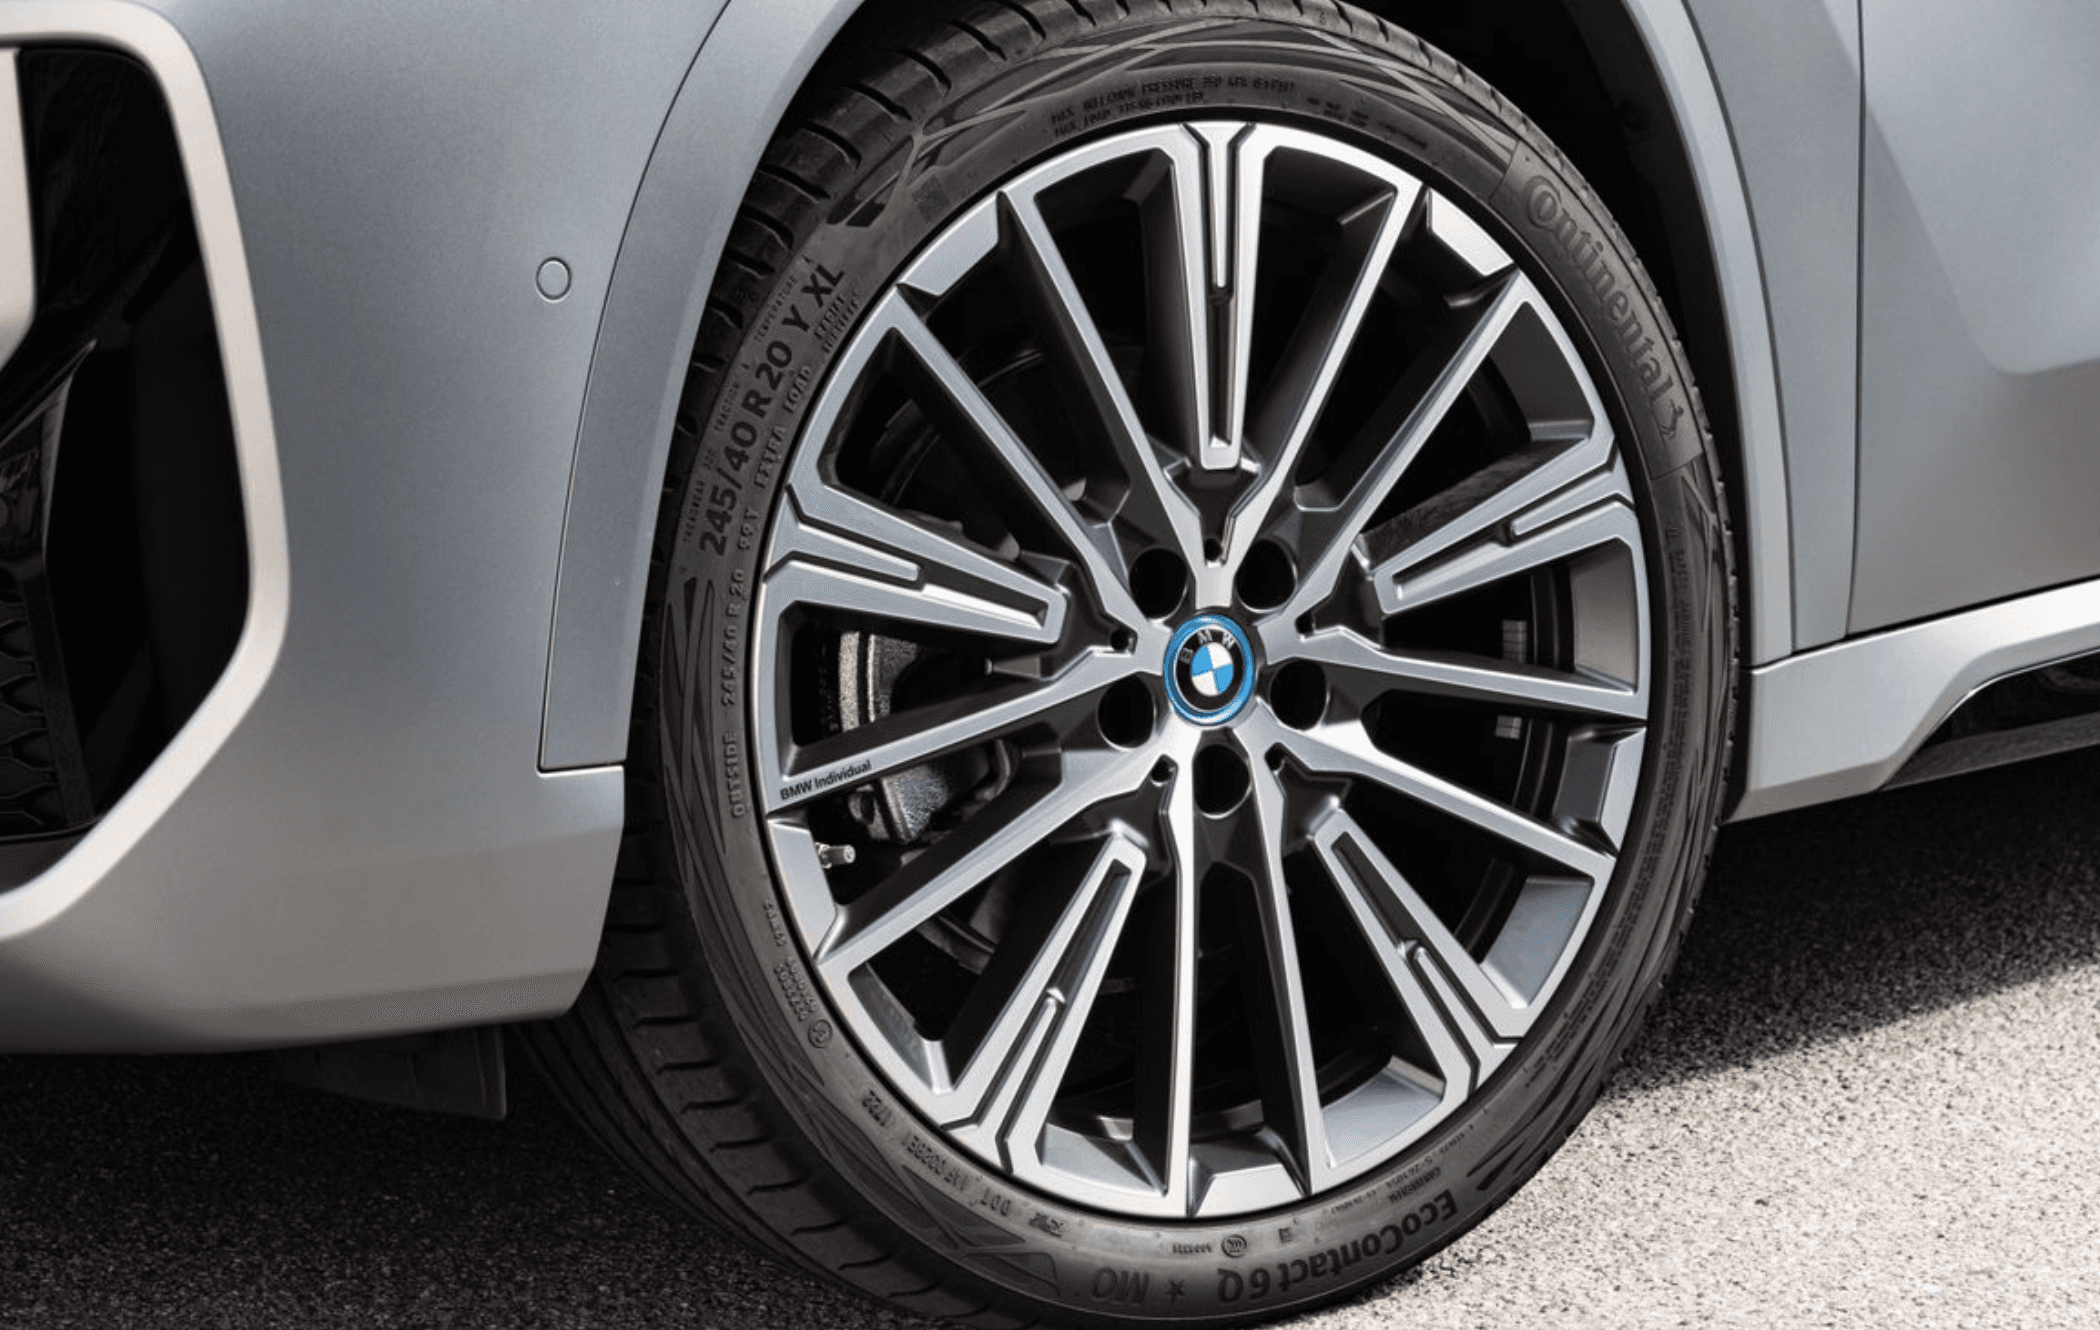 A close up photo of a BMW wheel